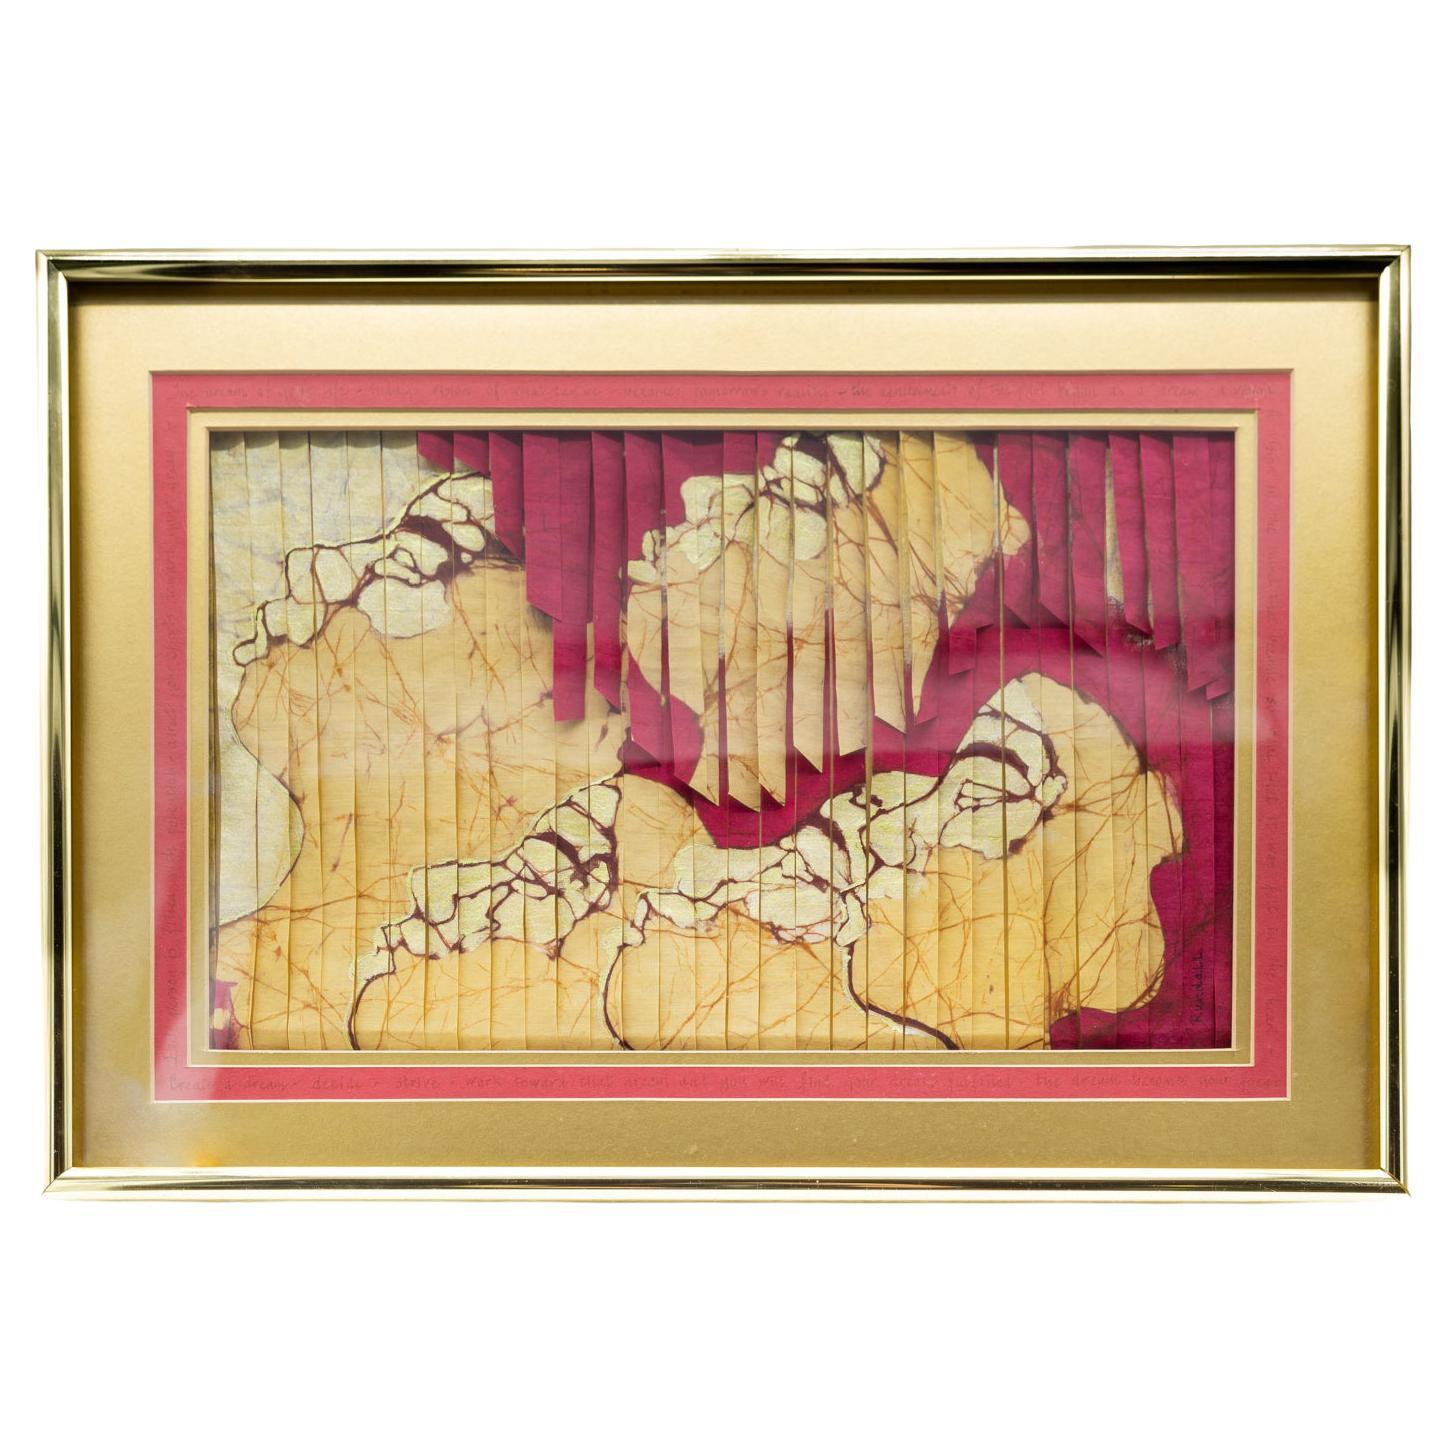 Ann & Dick Rundall - Textile d'art du milieu du siècle dernier en batik